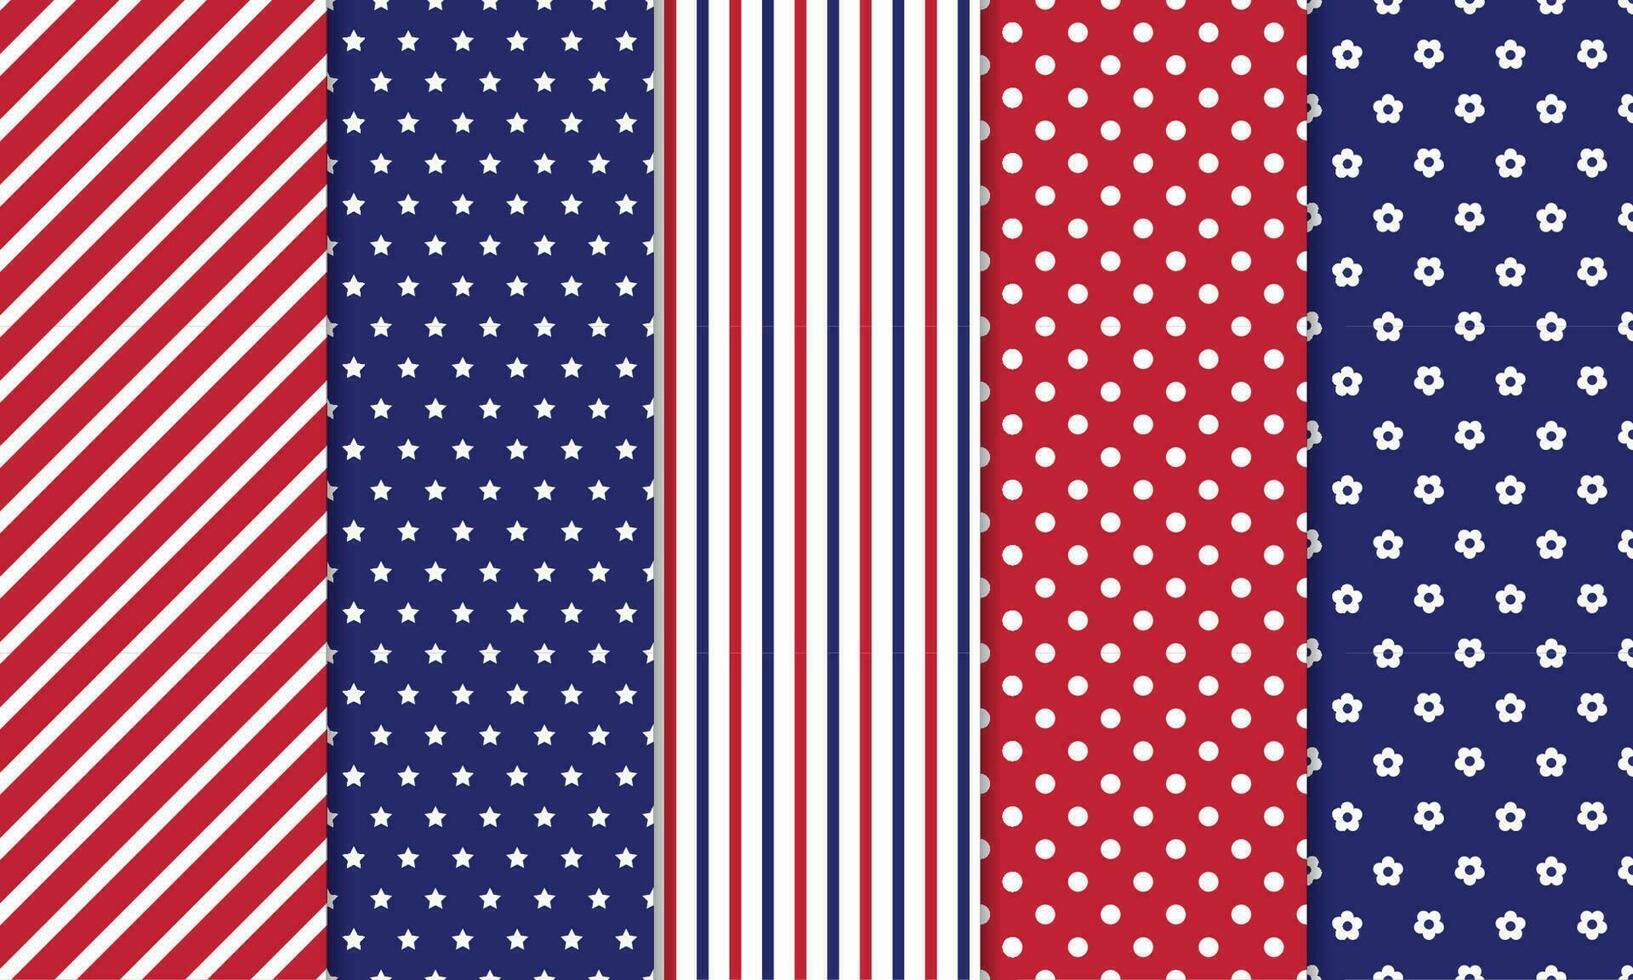 naadloos meetkundig patronen reeks in rood blauw Amerikaans Verenigde Staten van Amerika vlag kleur vector